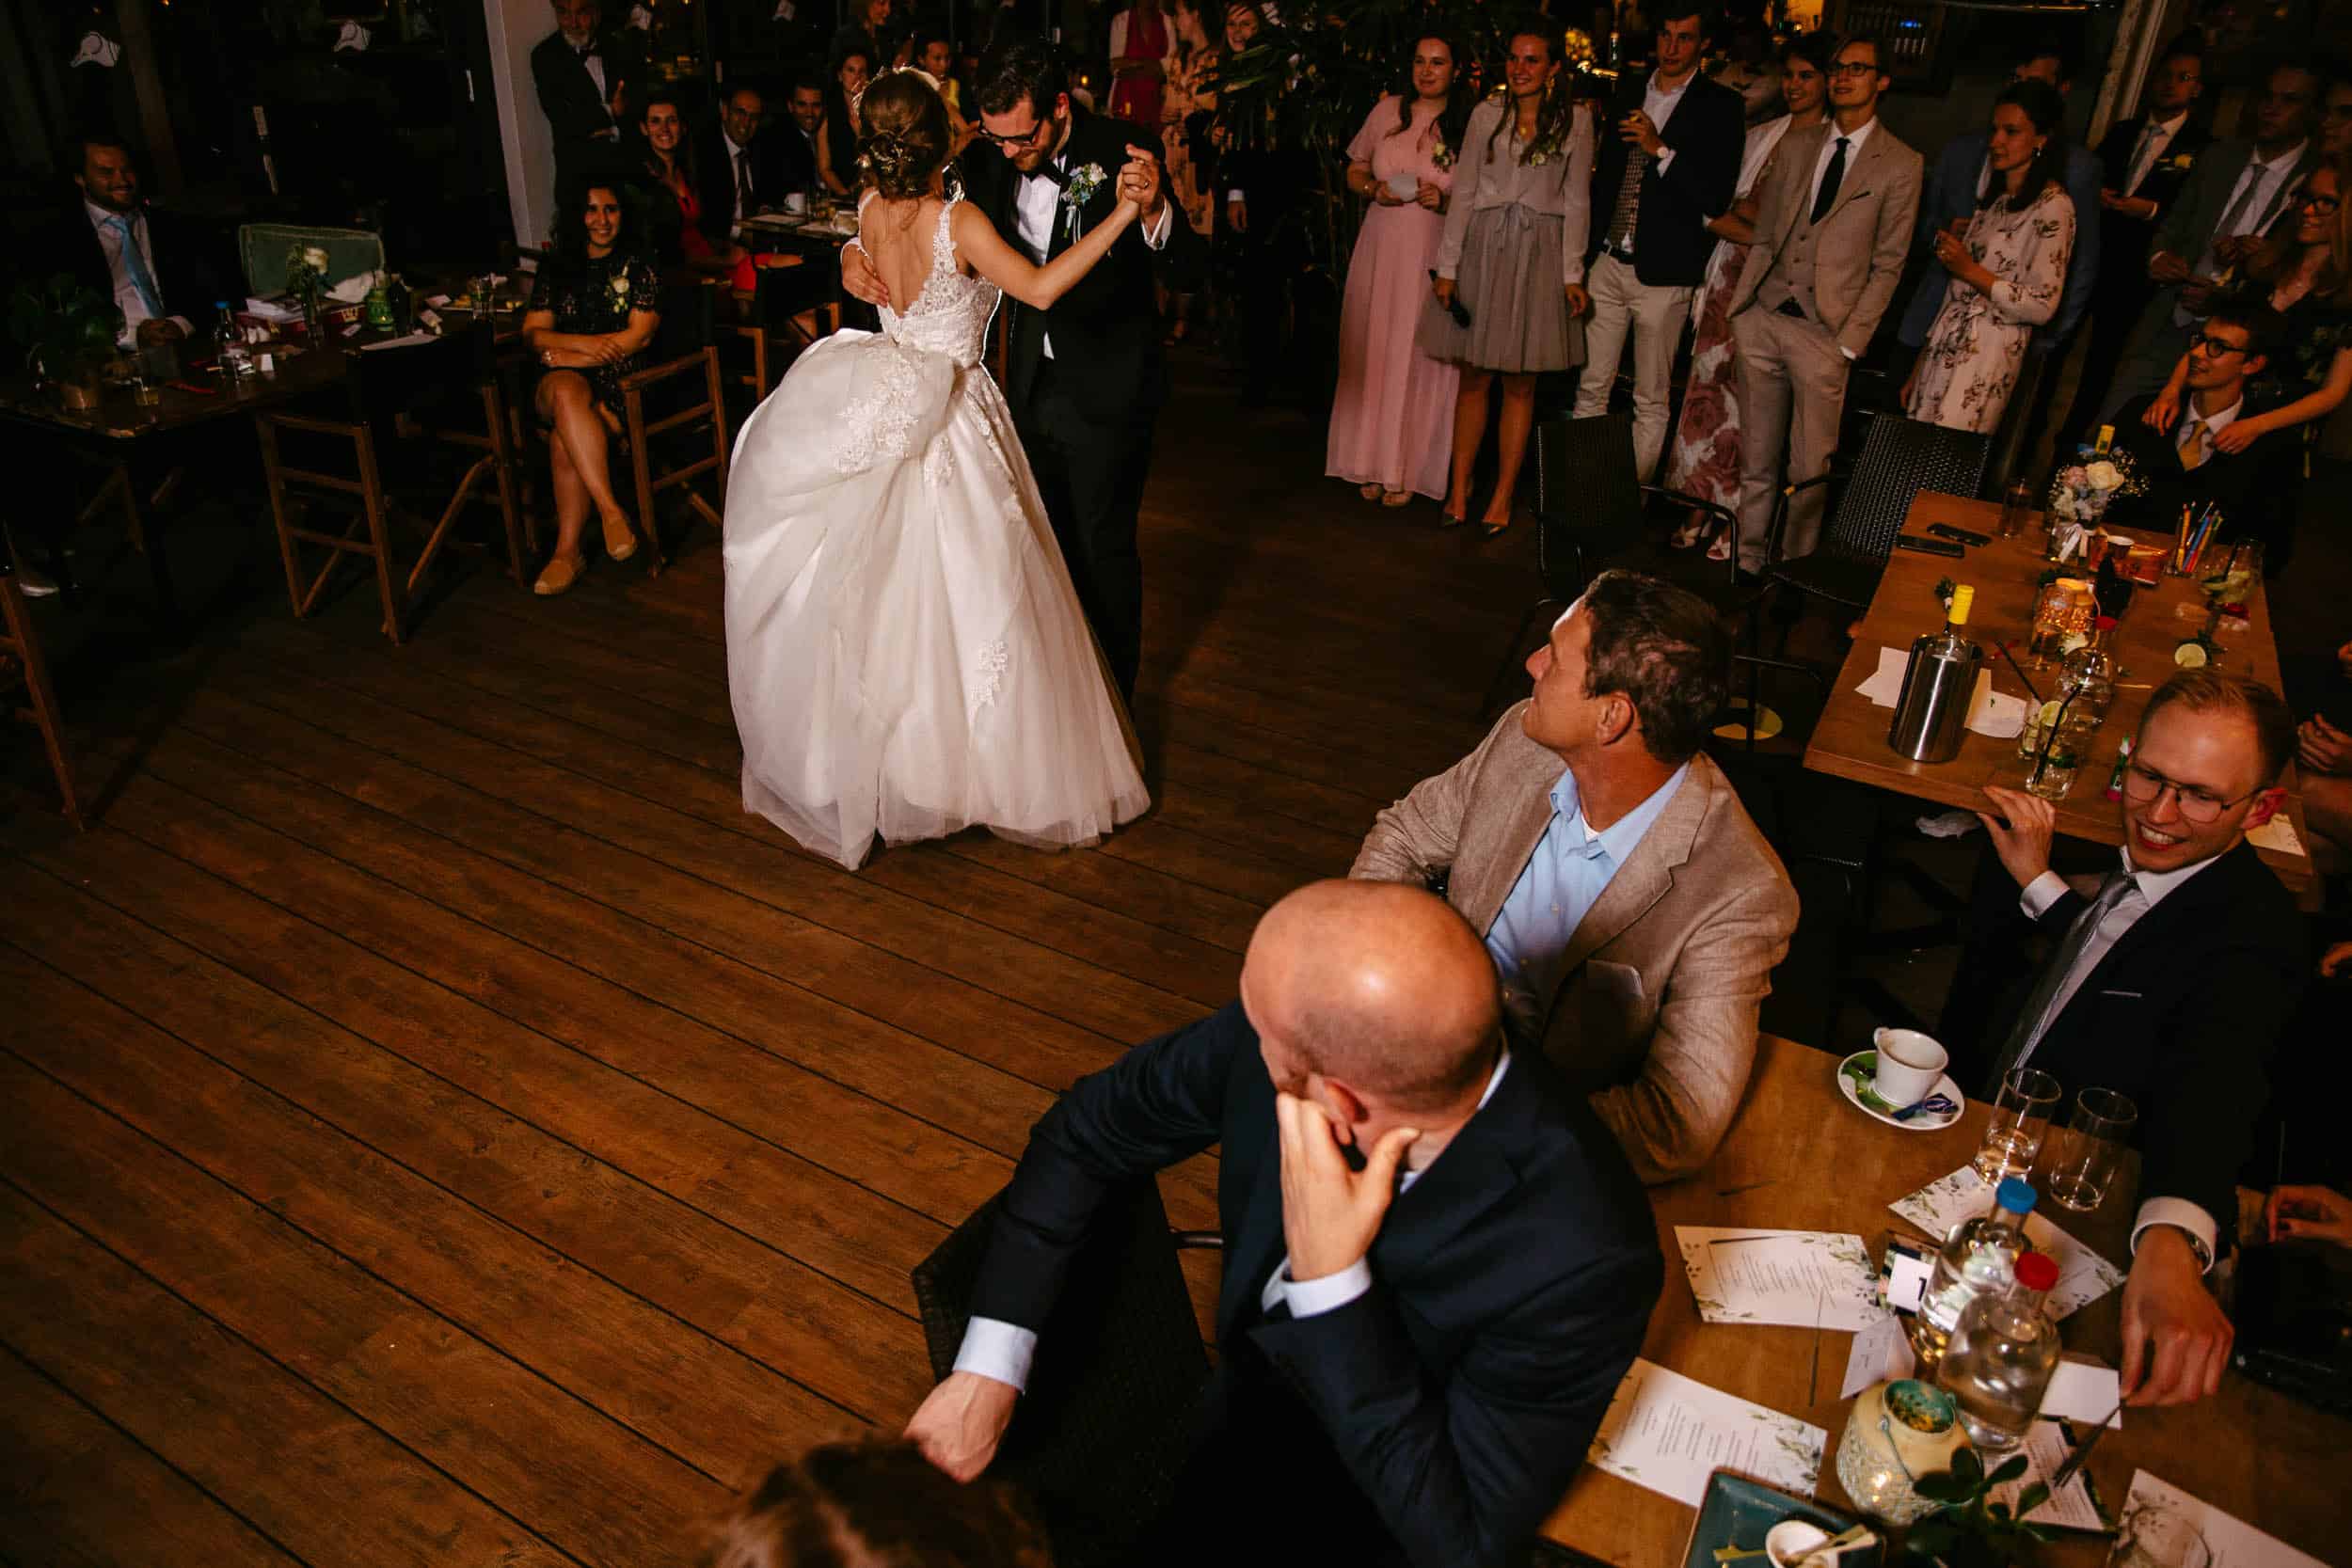 A bride and groom dance at a wedding reception at Trouwerij Botanische Tuin Delft.